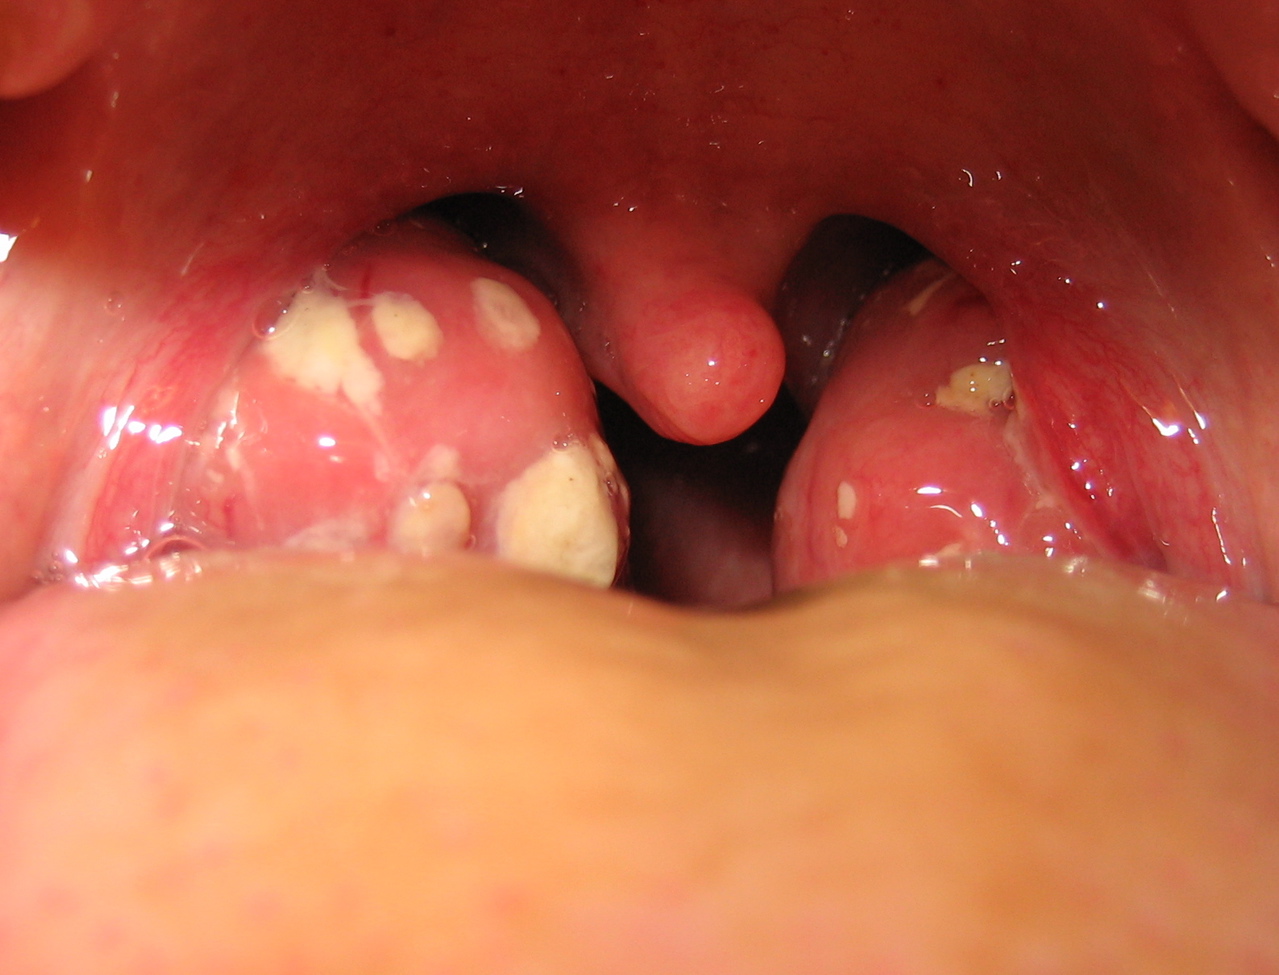 Acute tonsillitis